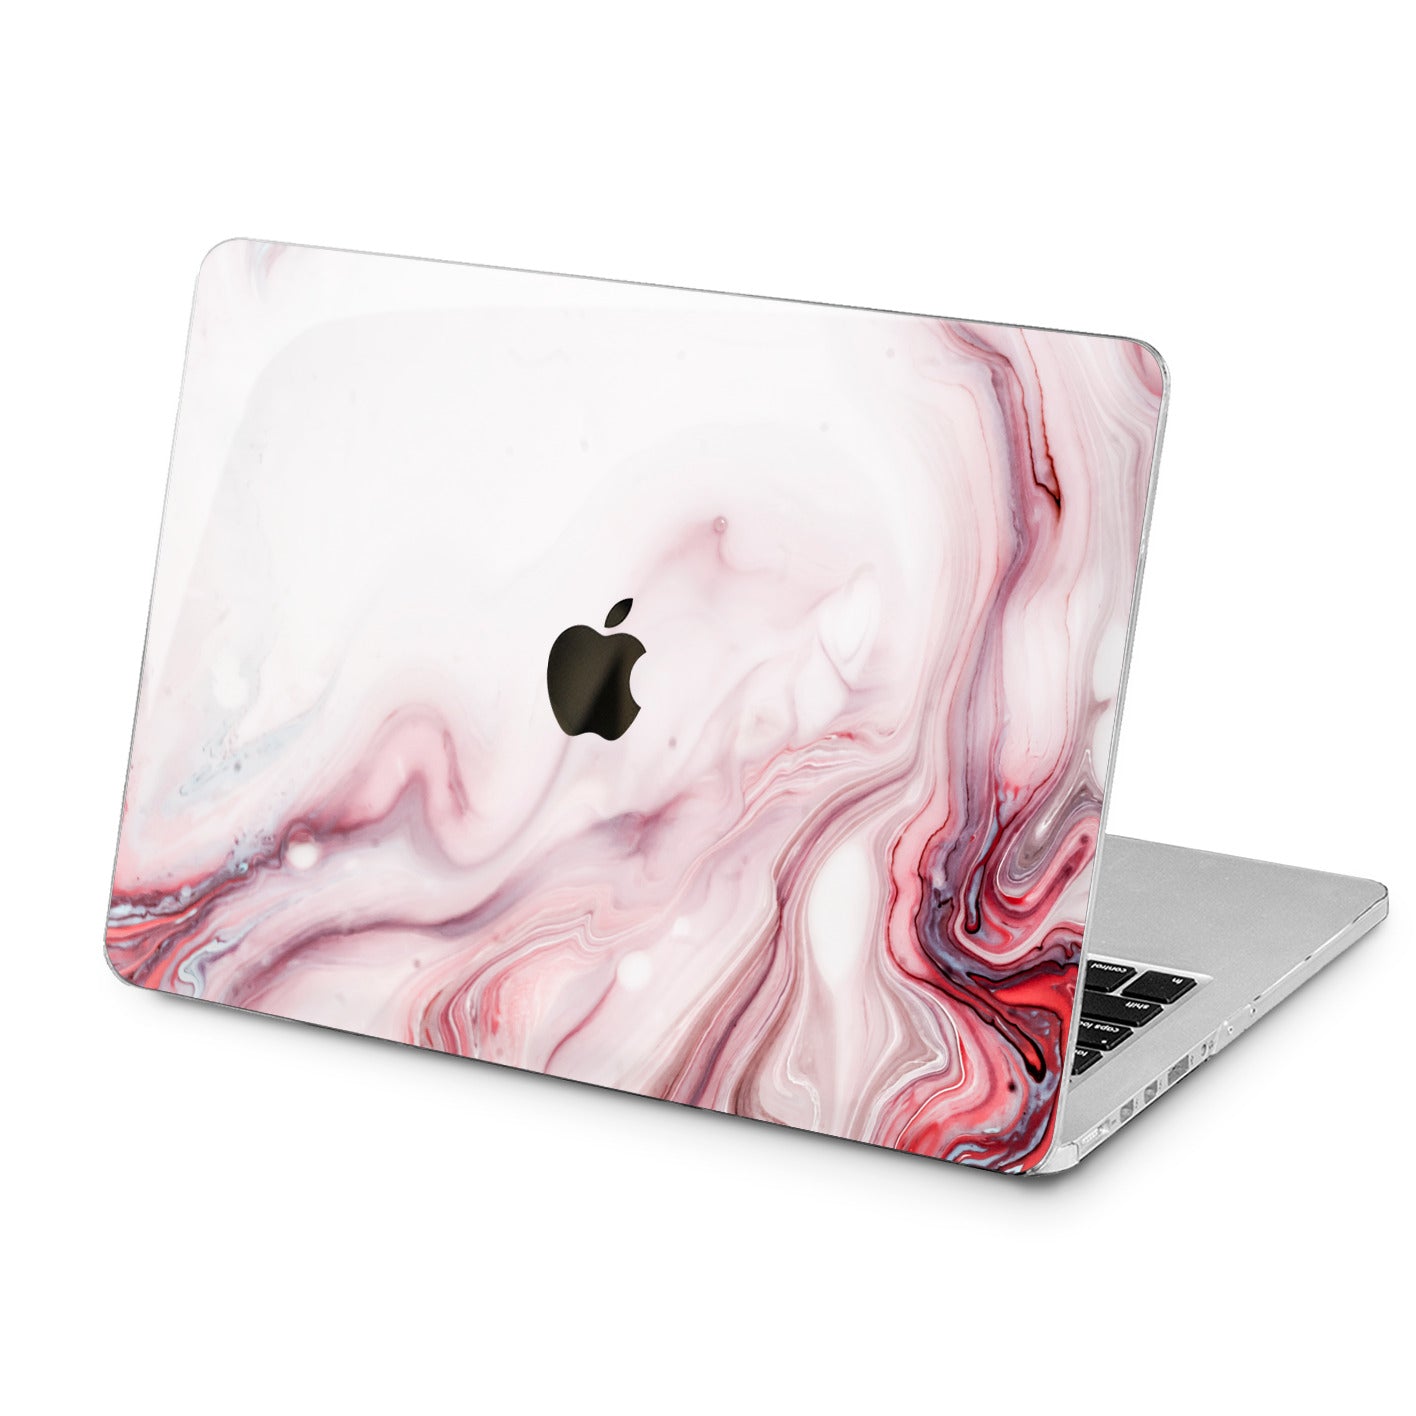 Lex Altern Lex Altern Liquid Red Case for your Laptop Apple Macbook.